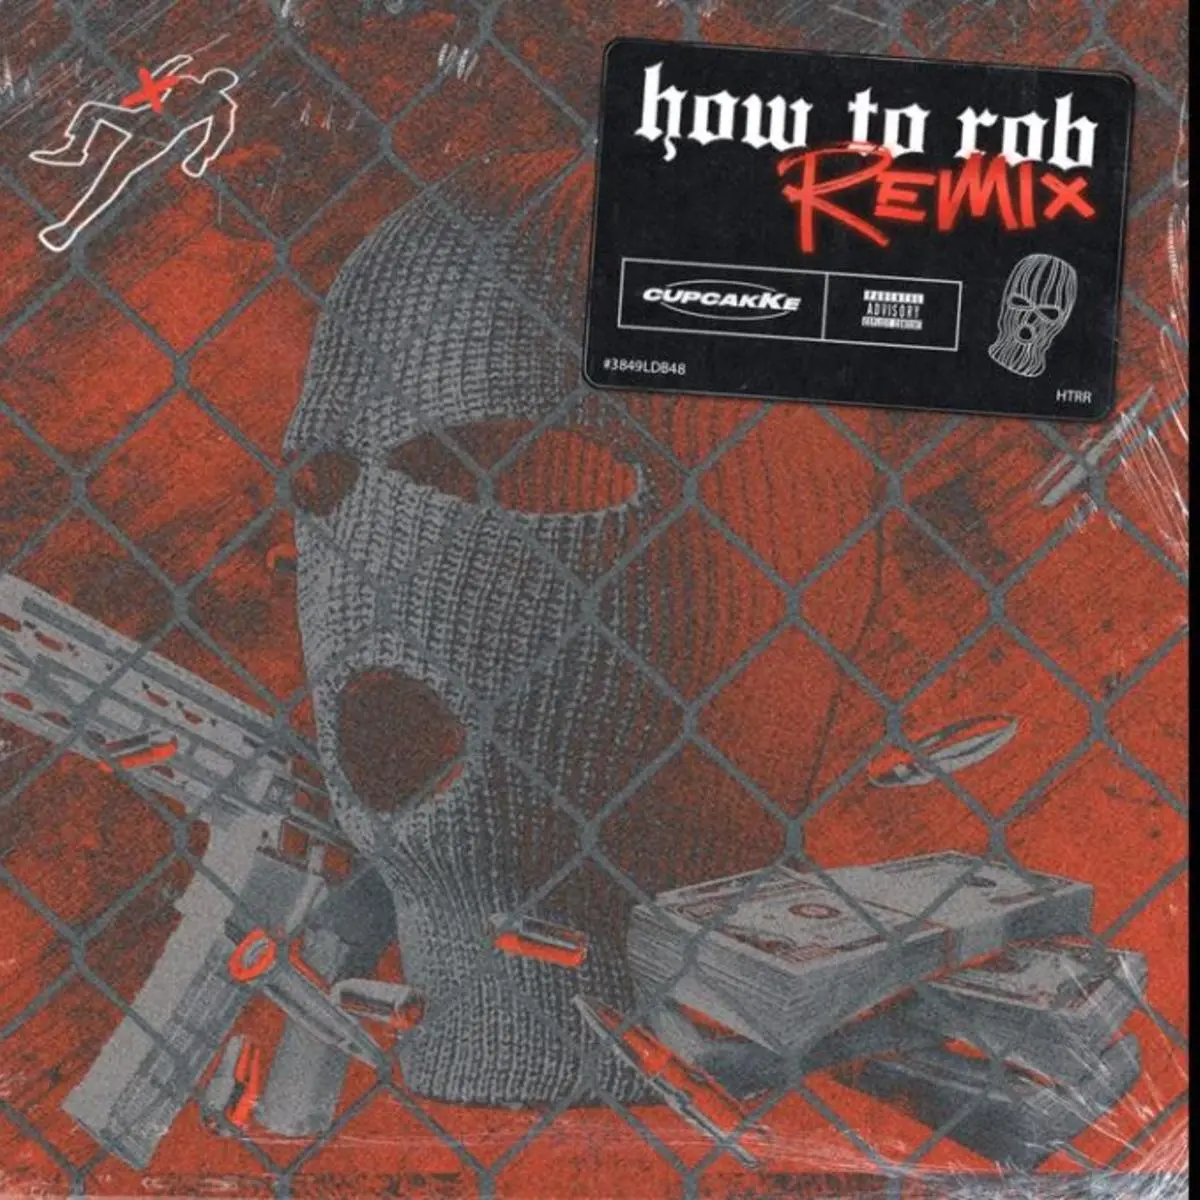 CupcakKe How to Rob (Remix) cover artwork